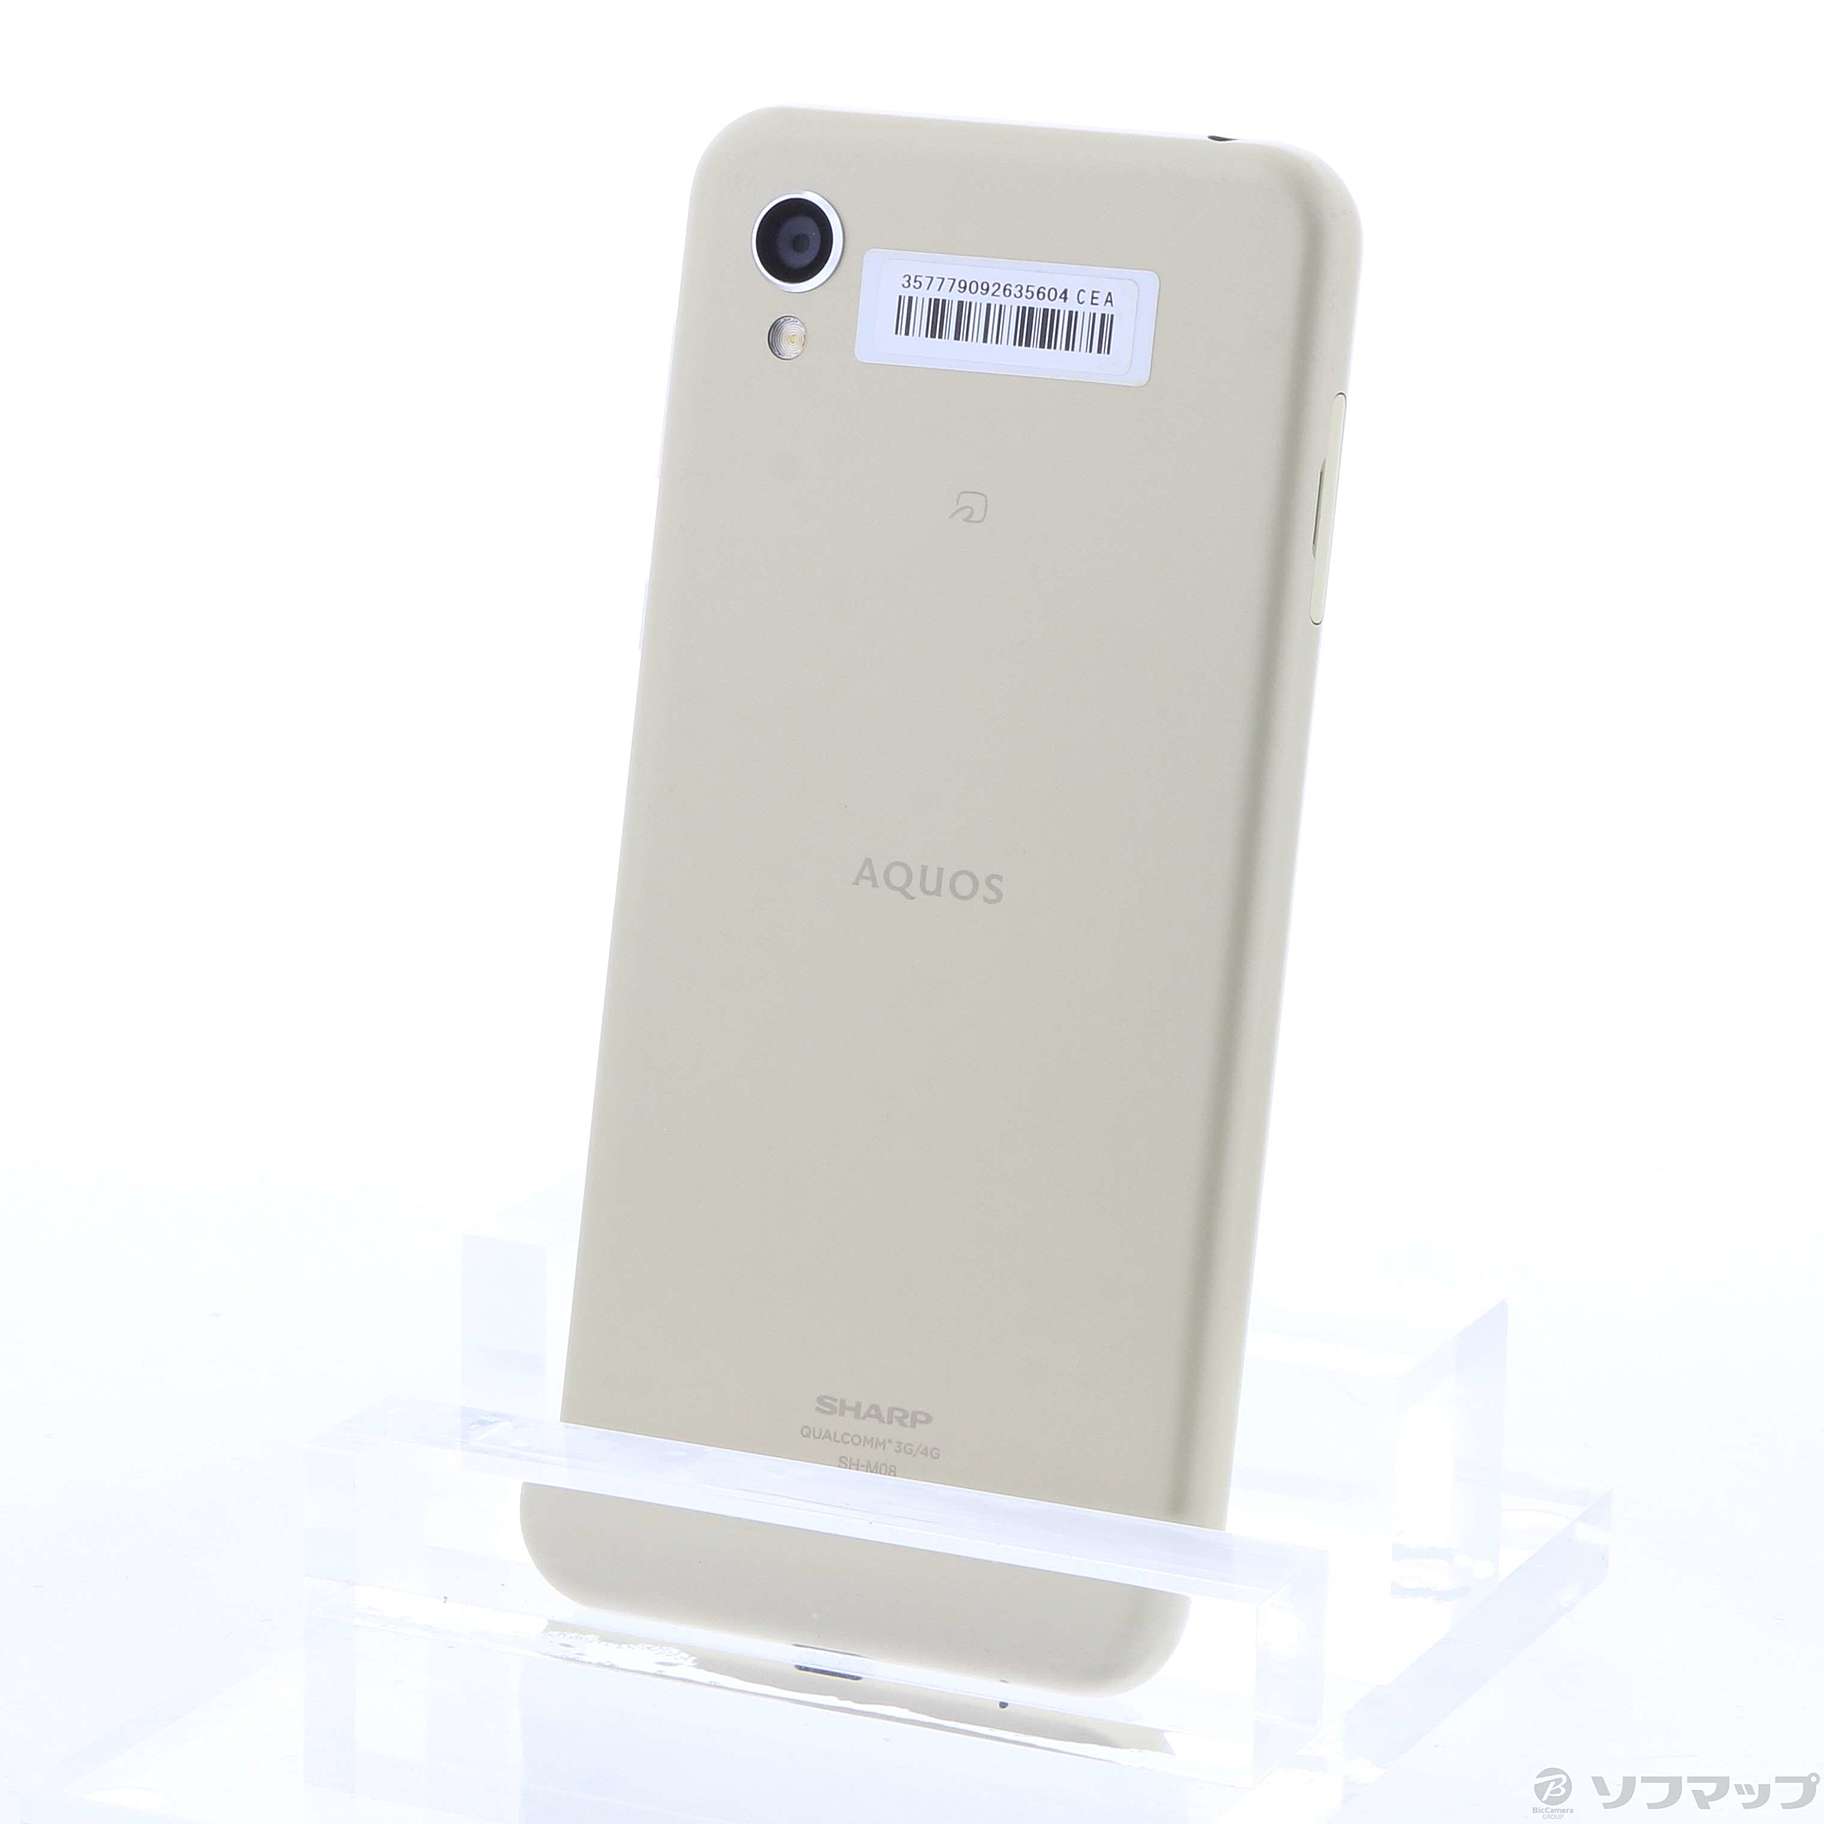 AQUOS sense2 32GB アッシュイエロー SH-M08 SIMフリー